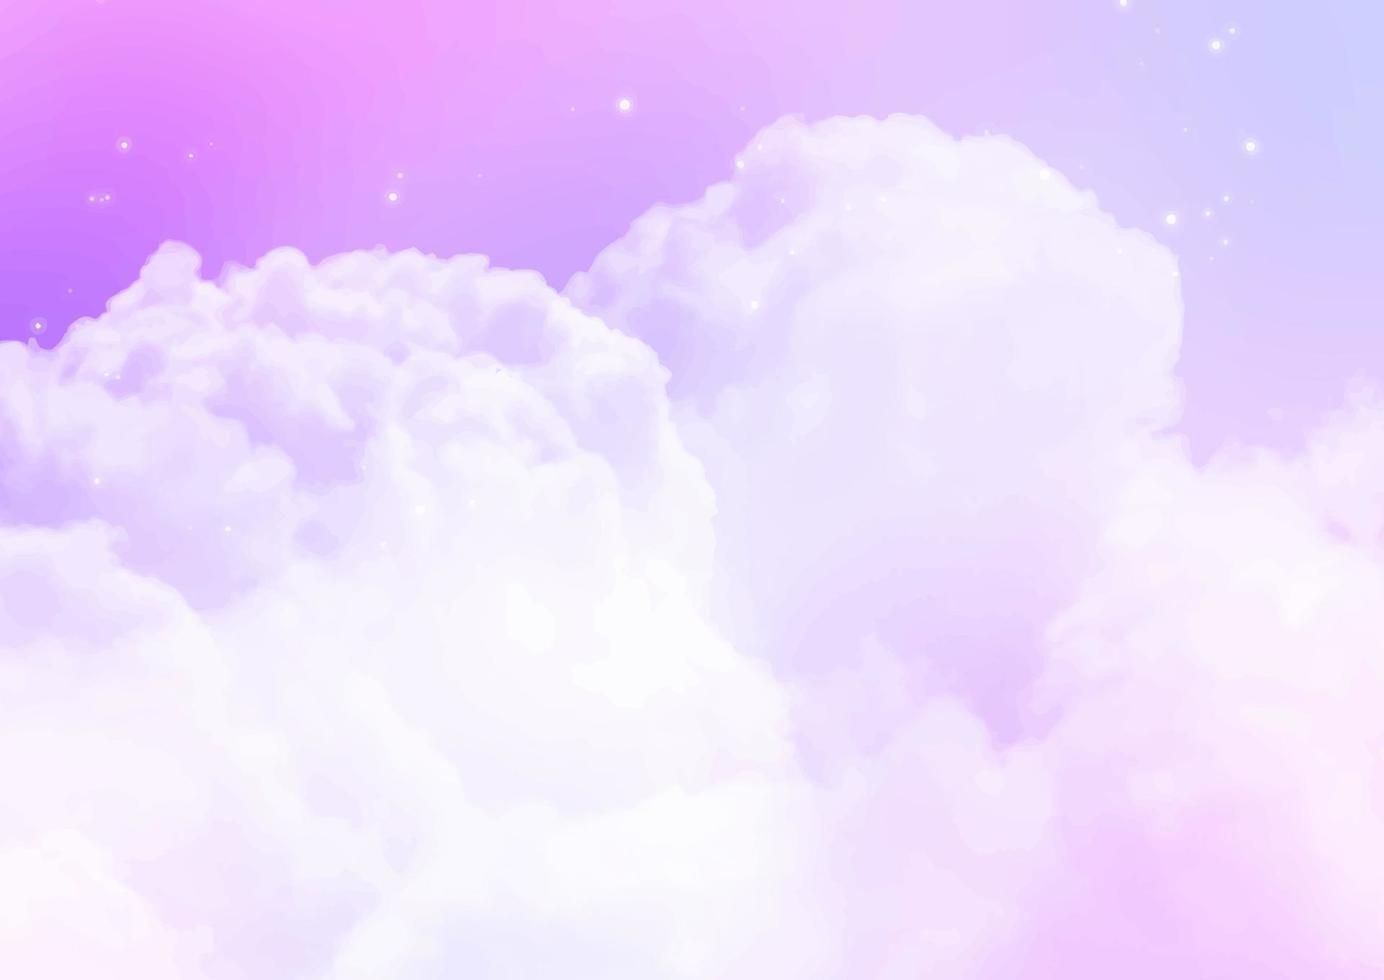 sugar cotton candy sky background vector